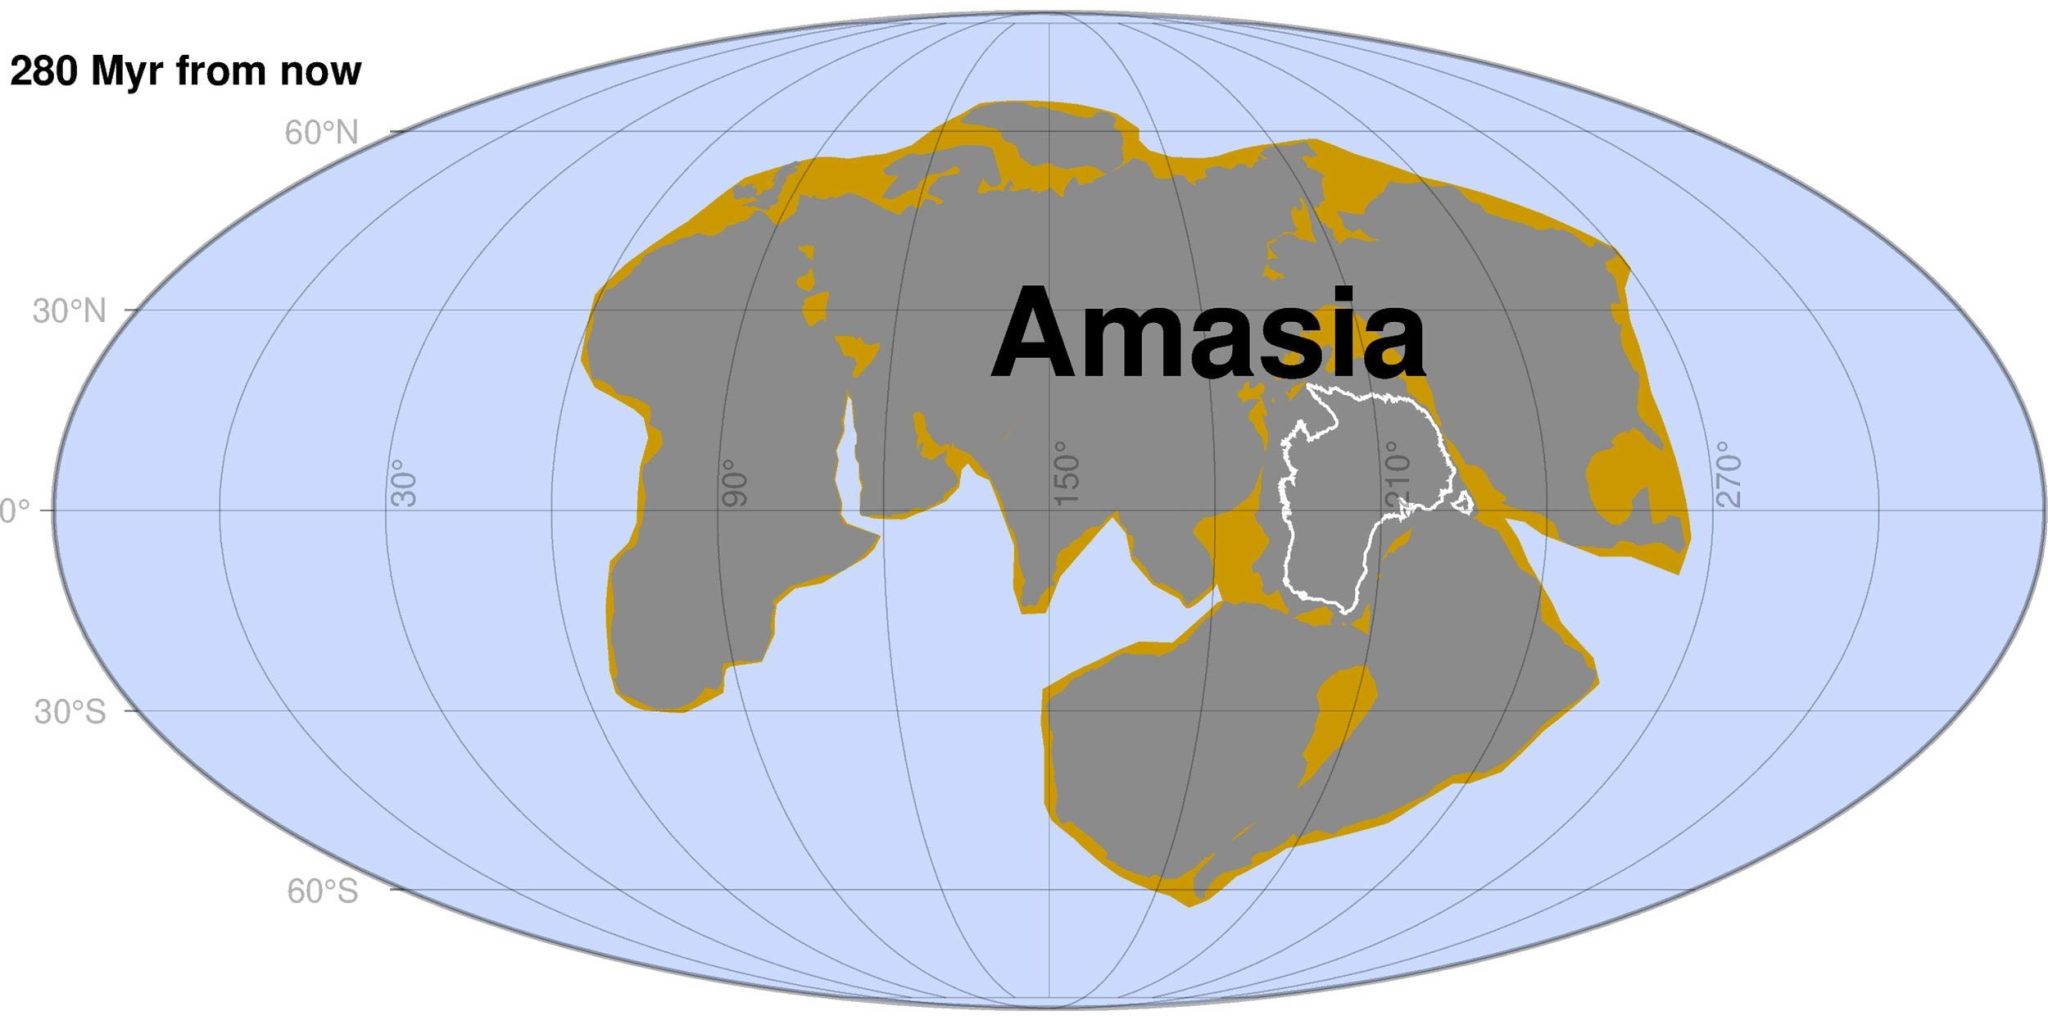 Amasia supercontinent